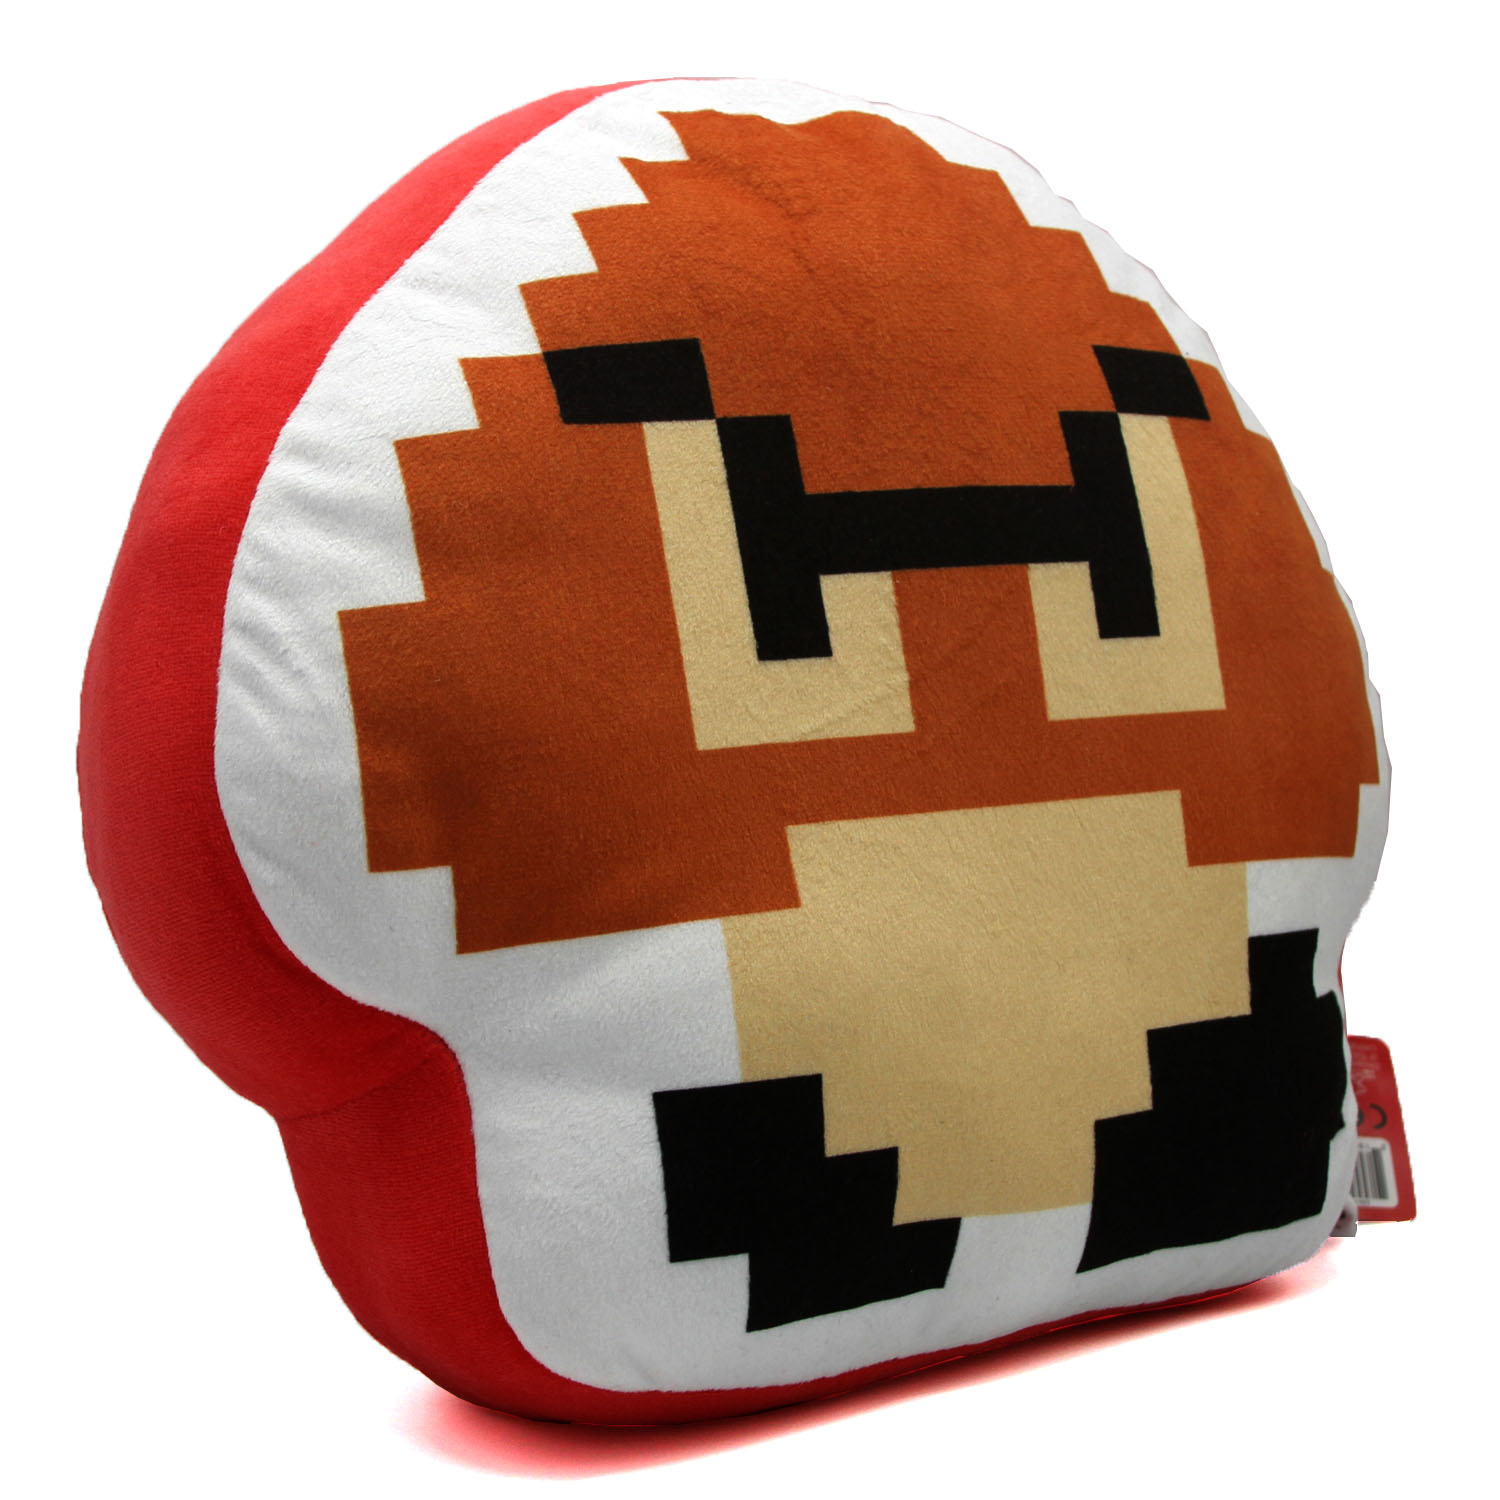 Super Mario - Goomba 8 Bit Pillow - image 2 of 3